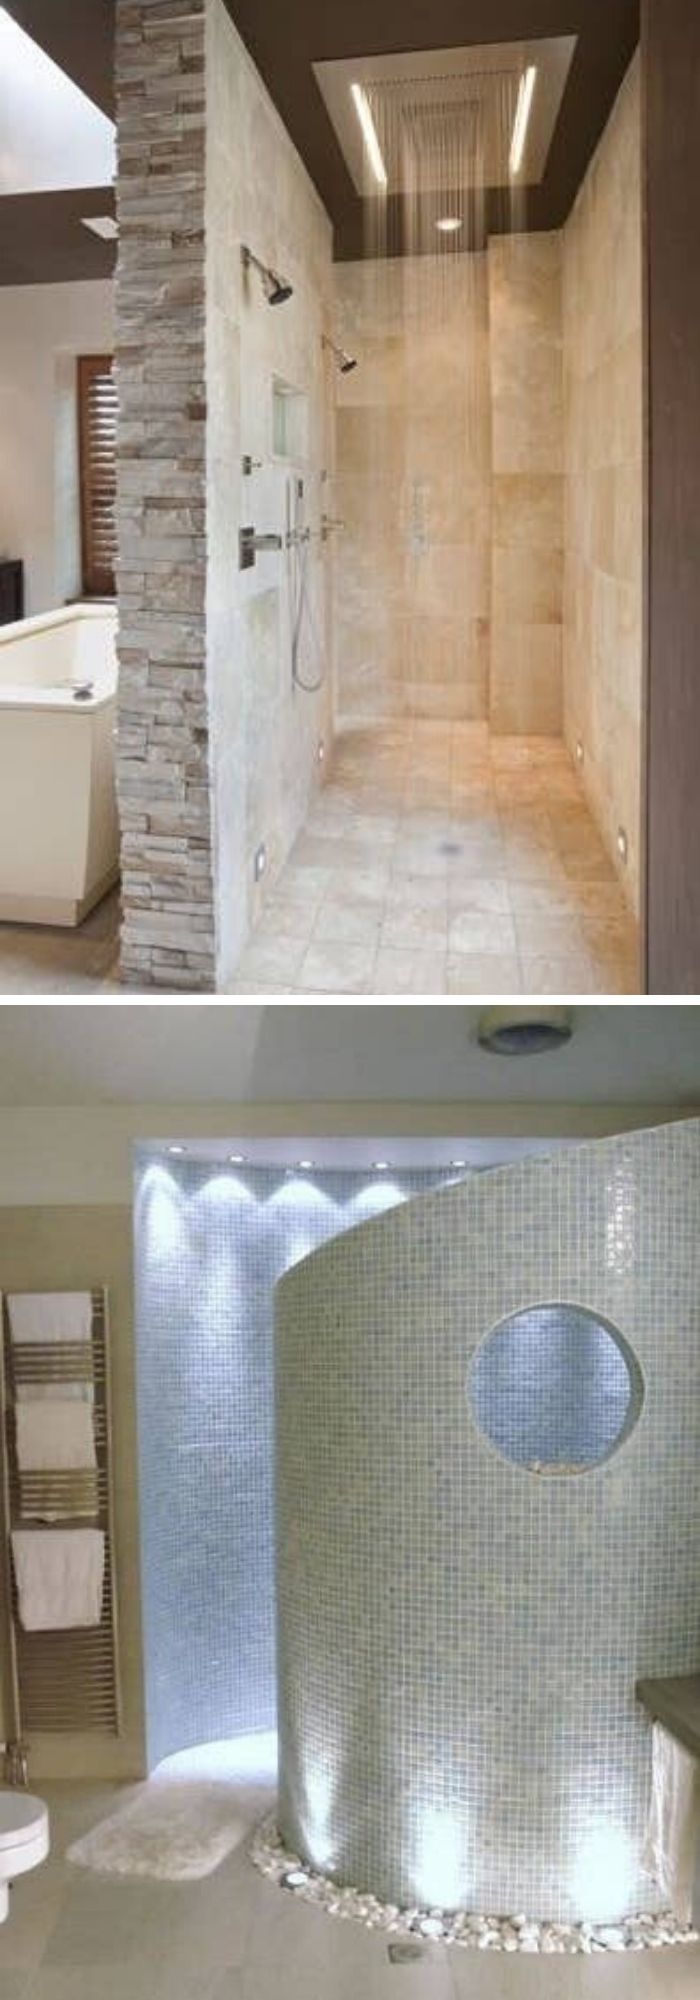 Build a walk-in shower